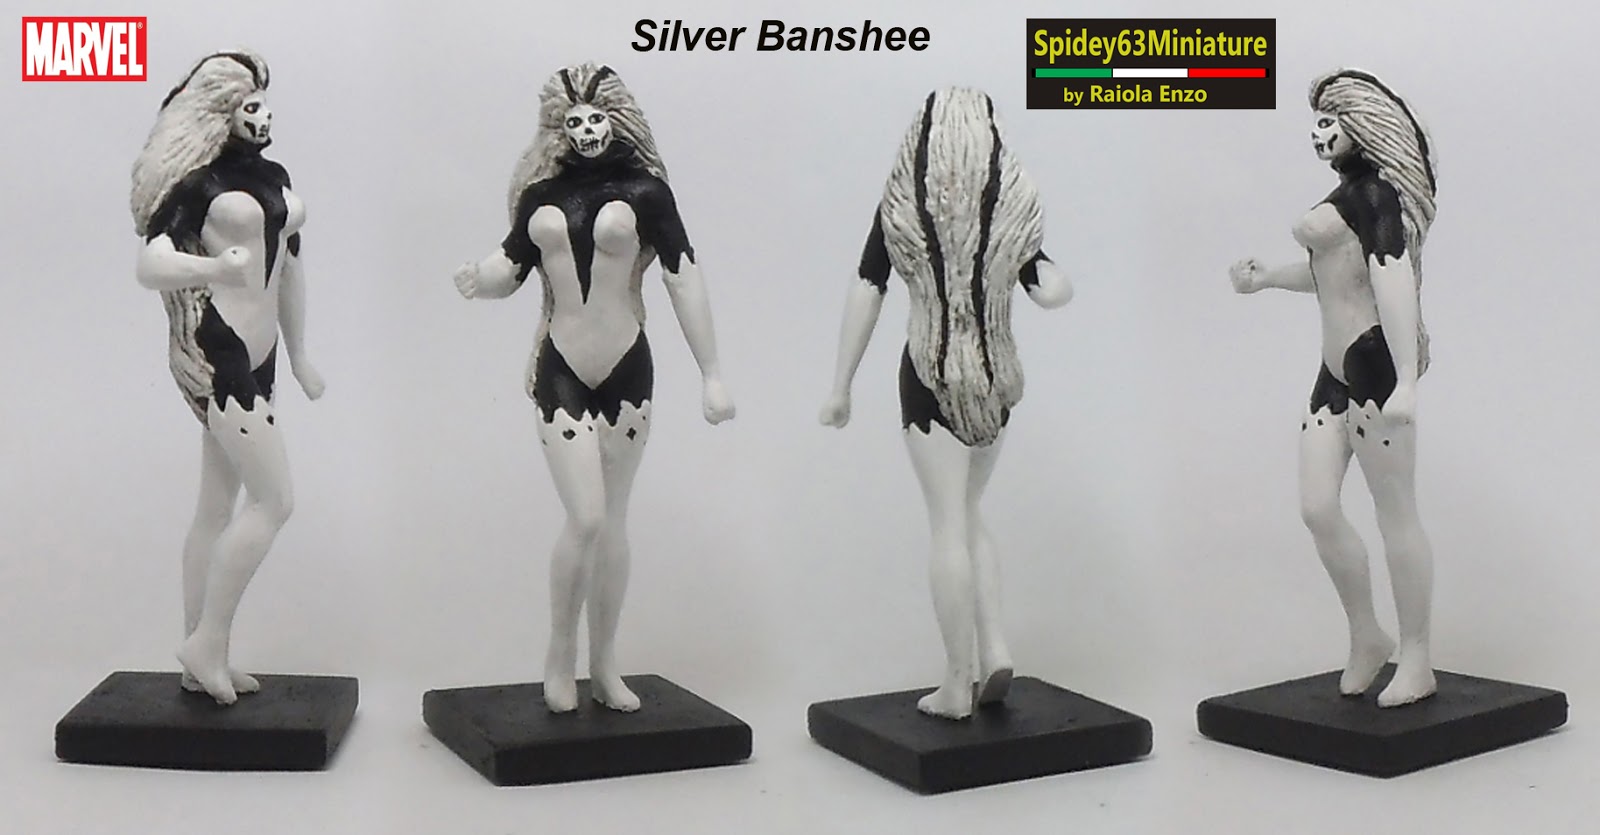 Silver banshee costume